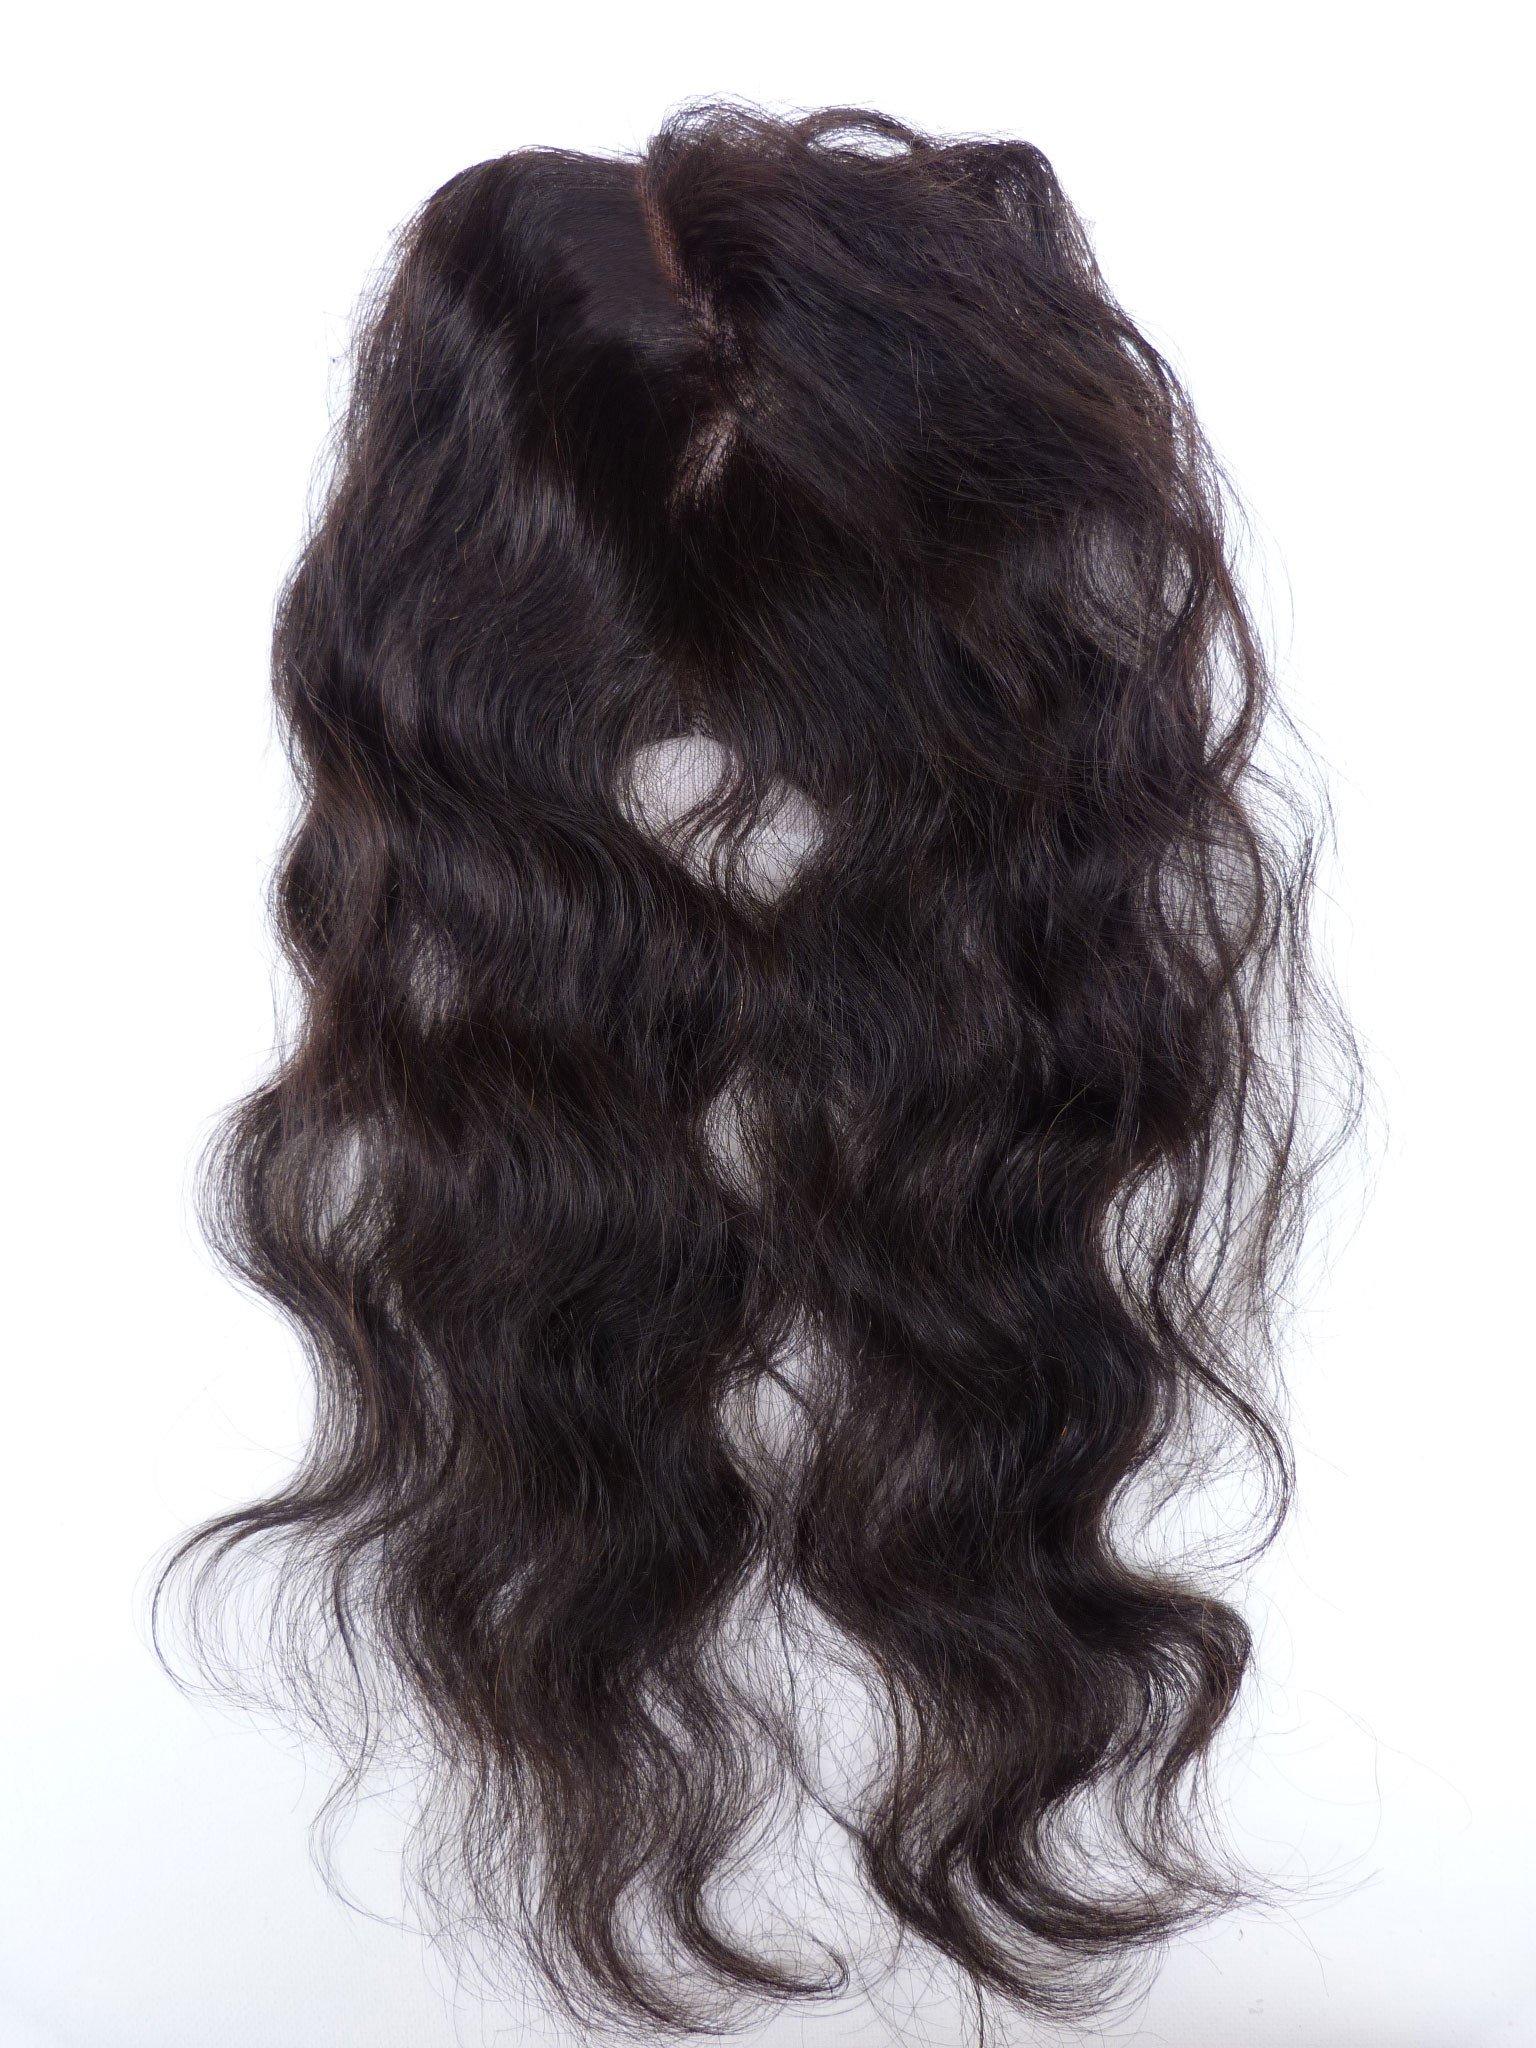 Brazilian Virgin Remy Lace Top Closure, 3.5" x 4"-Virgin Hair & Beauty, The Best Hair Extensions, Real Virgin Human Hair.